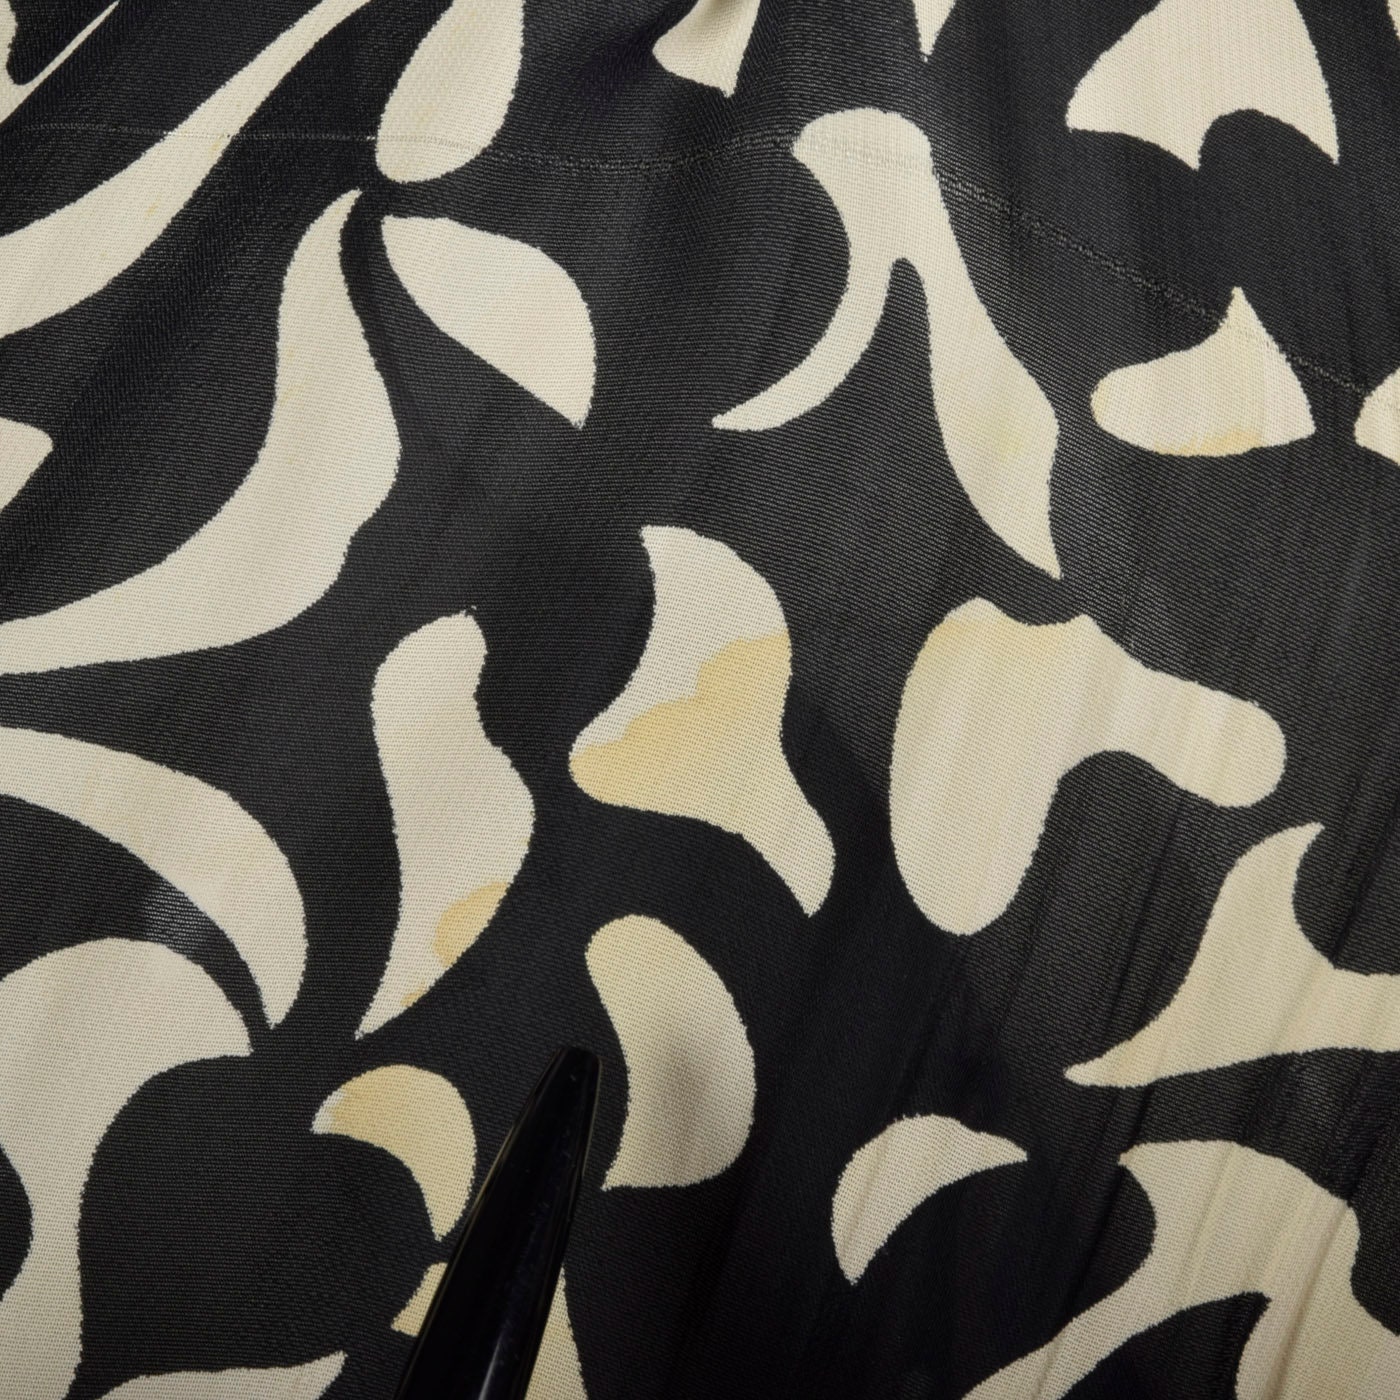 Large 1940s Dress Abstract Print Dress Sheer Overlay Black - Etsy